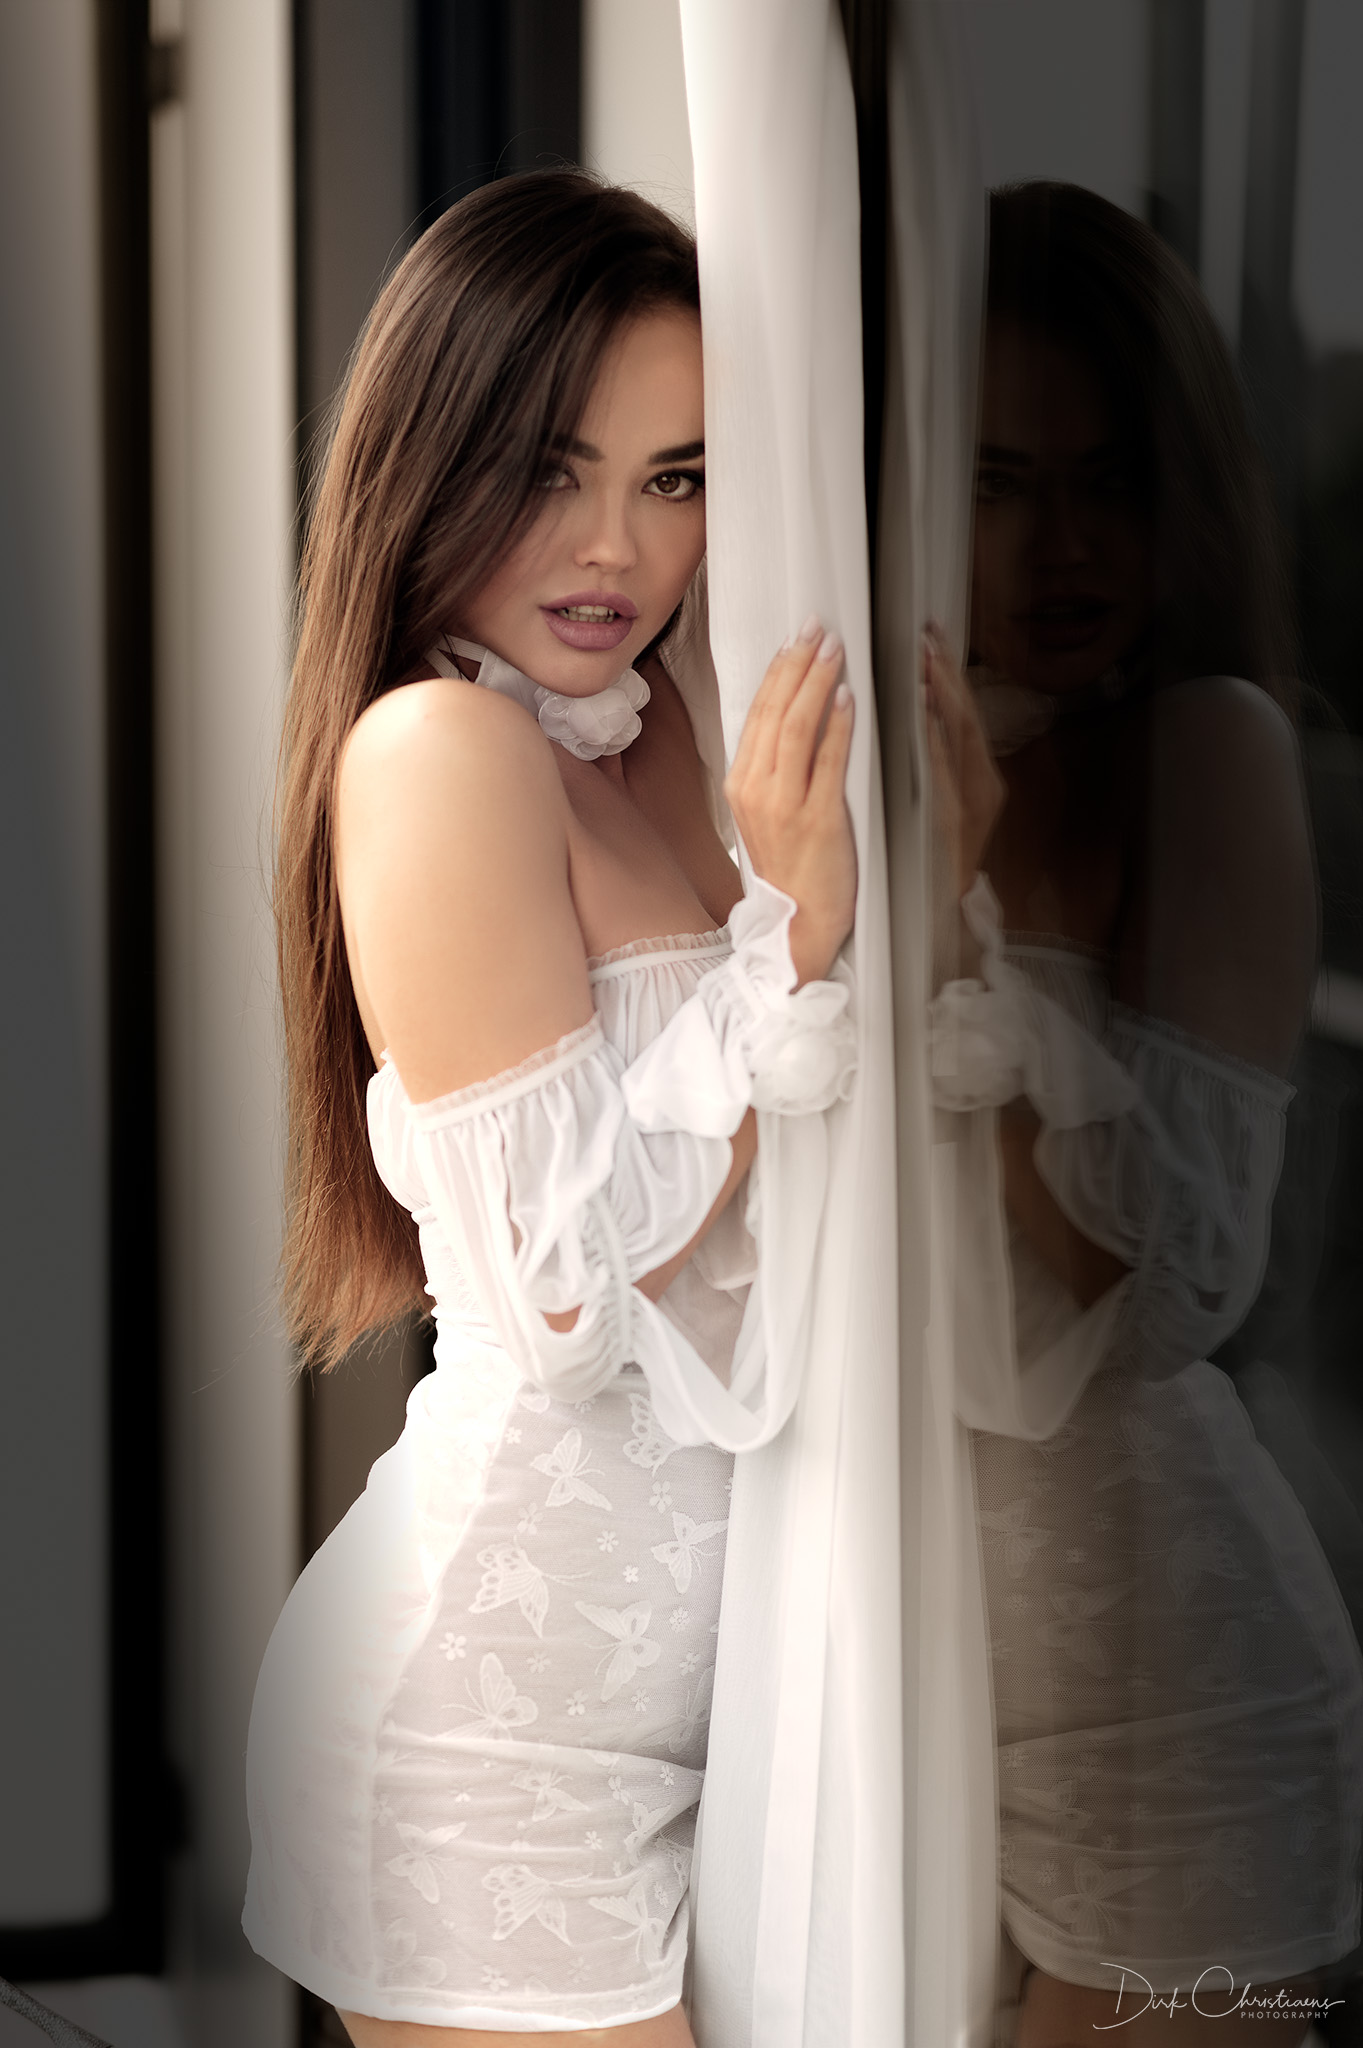 Anna Sokolova, model from Ukraine at a boudoir photoshoot